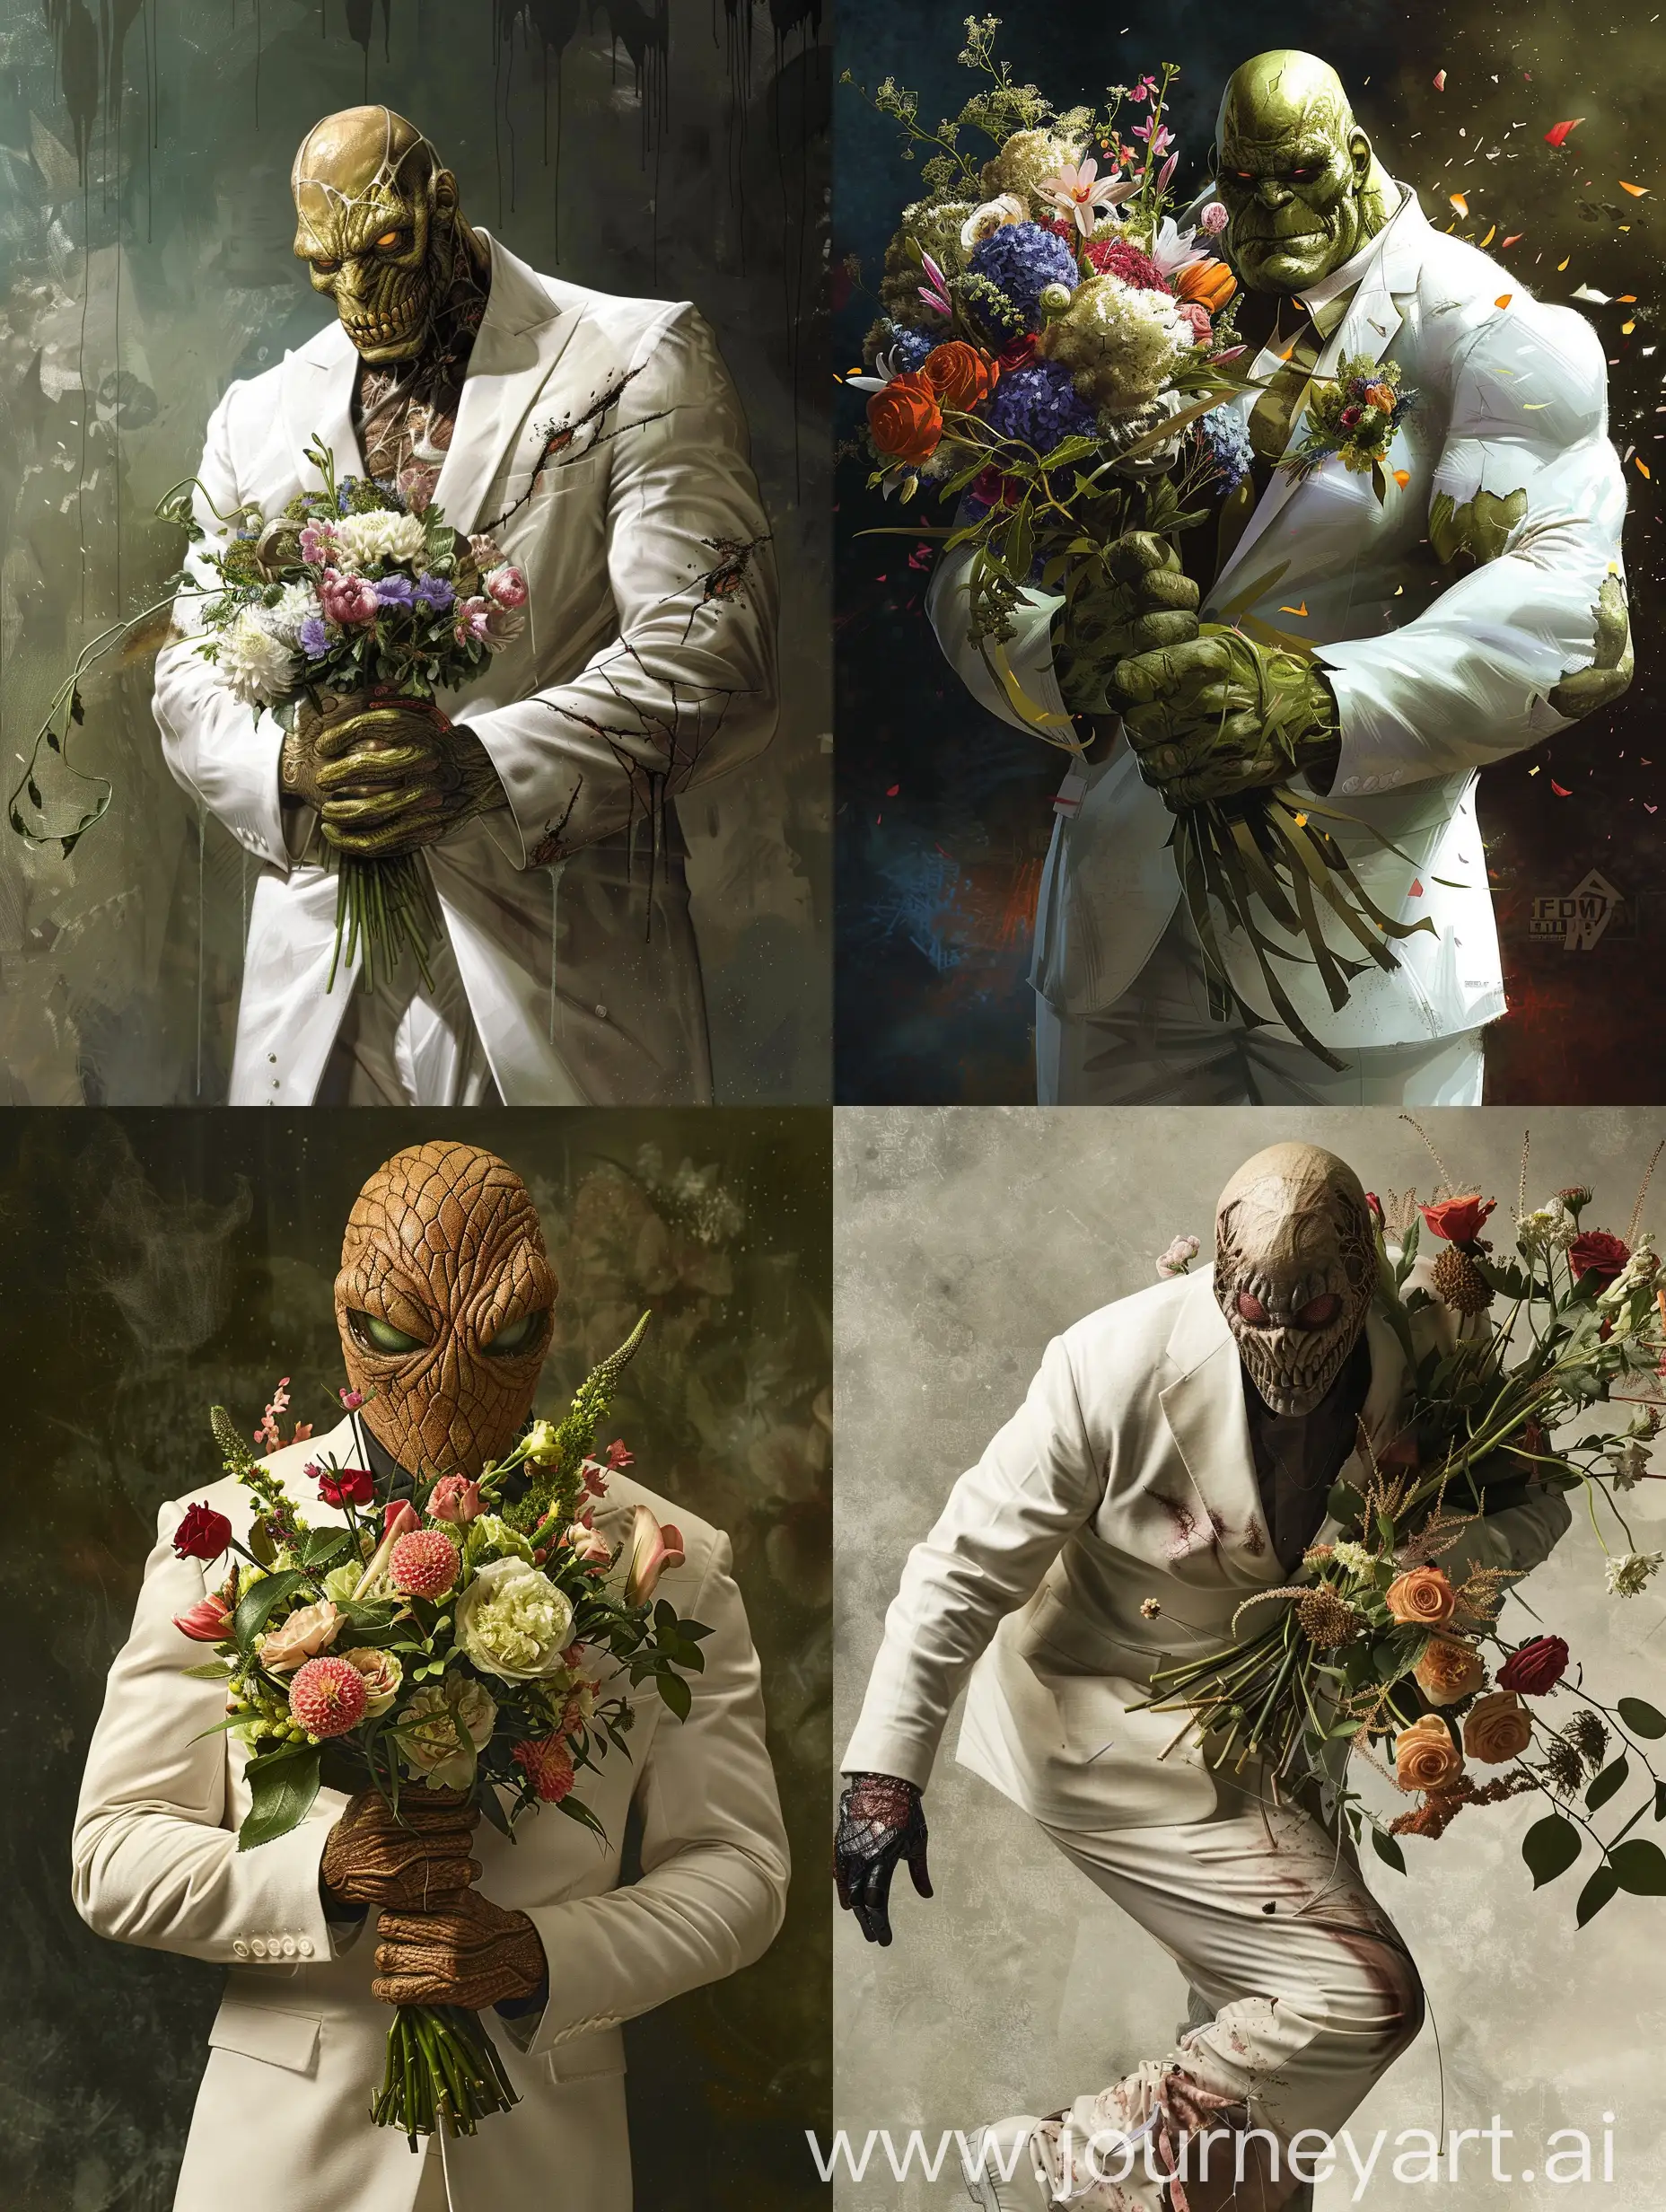 Elegant-Eddie-Brock-Holding-Bouquet-of-Flowers-in-Stylish-White-Suit